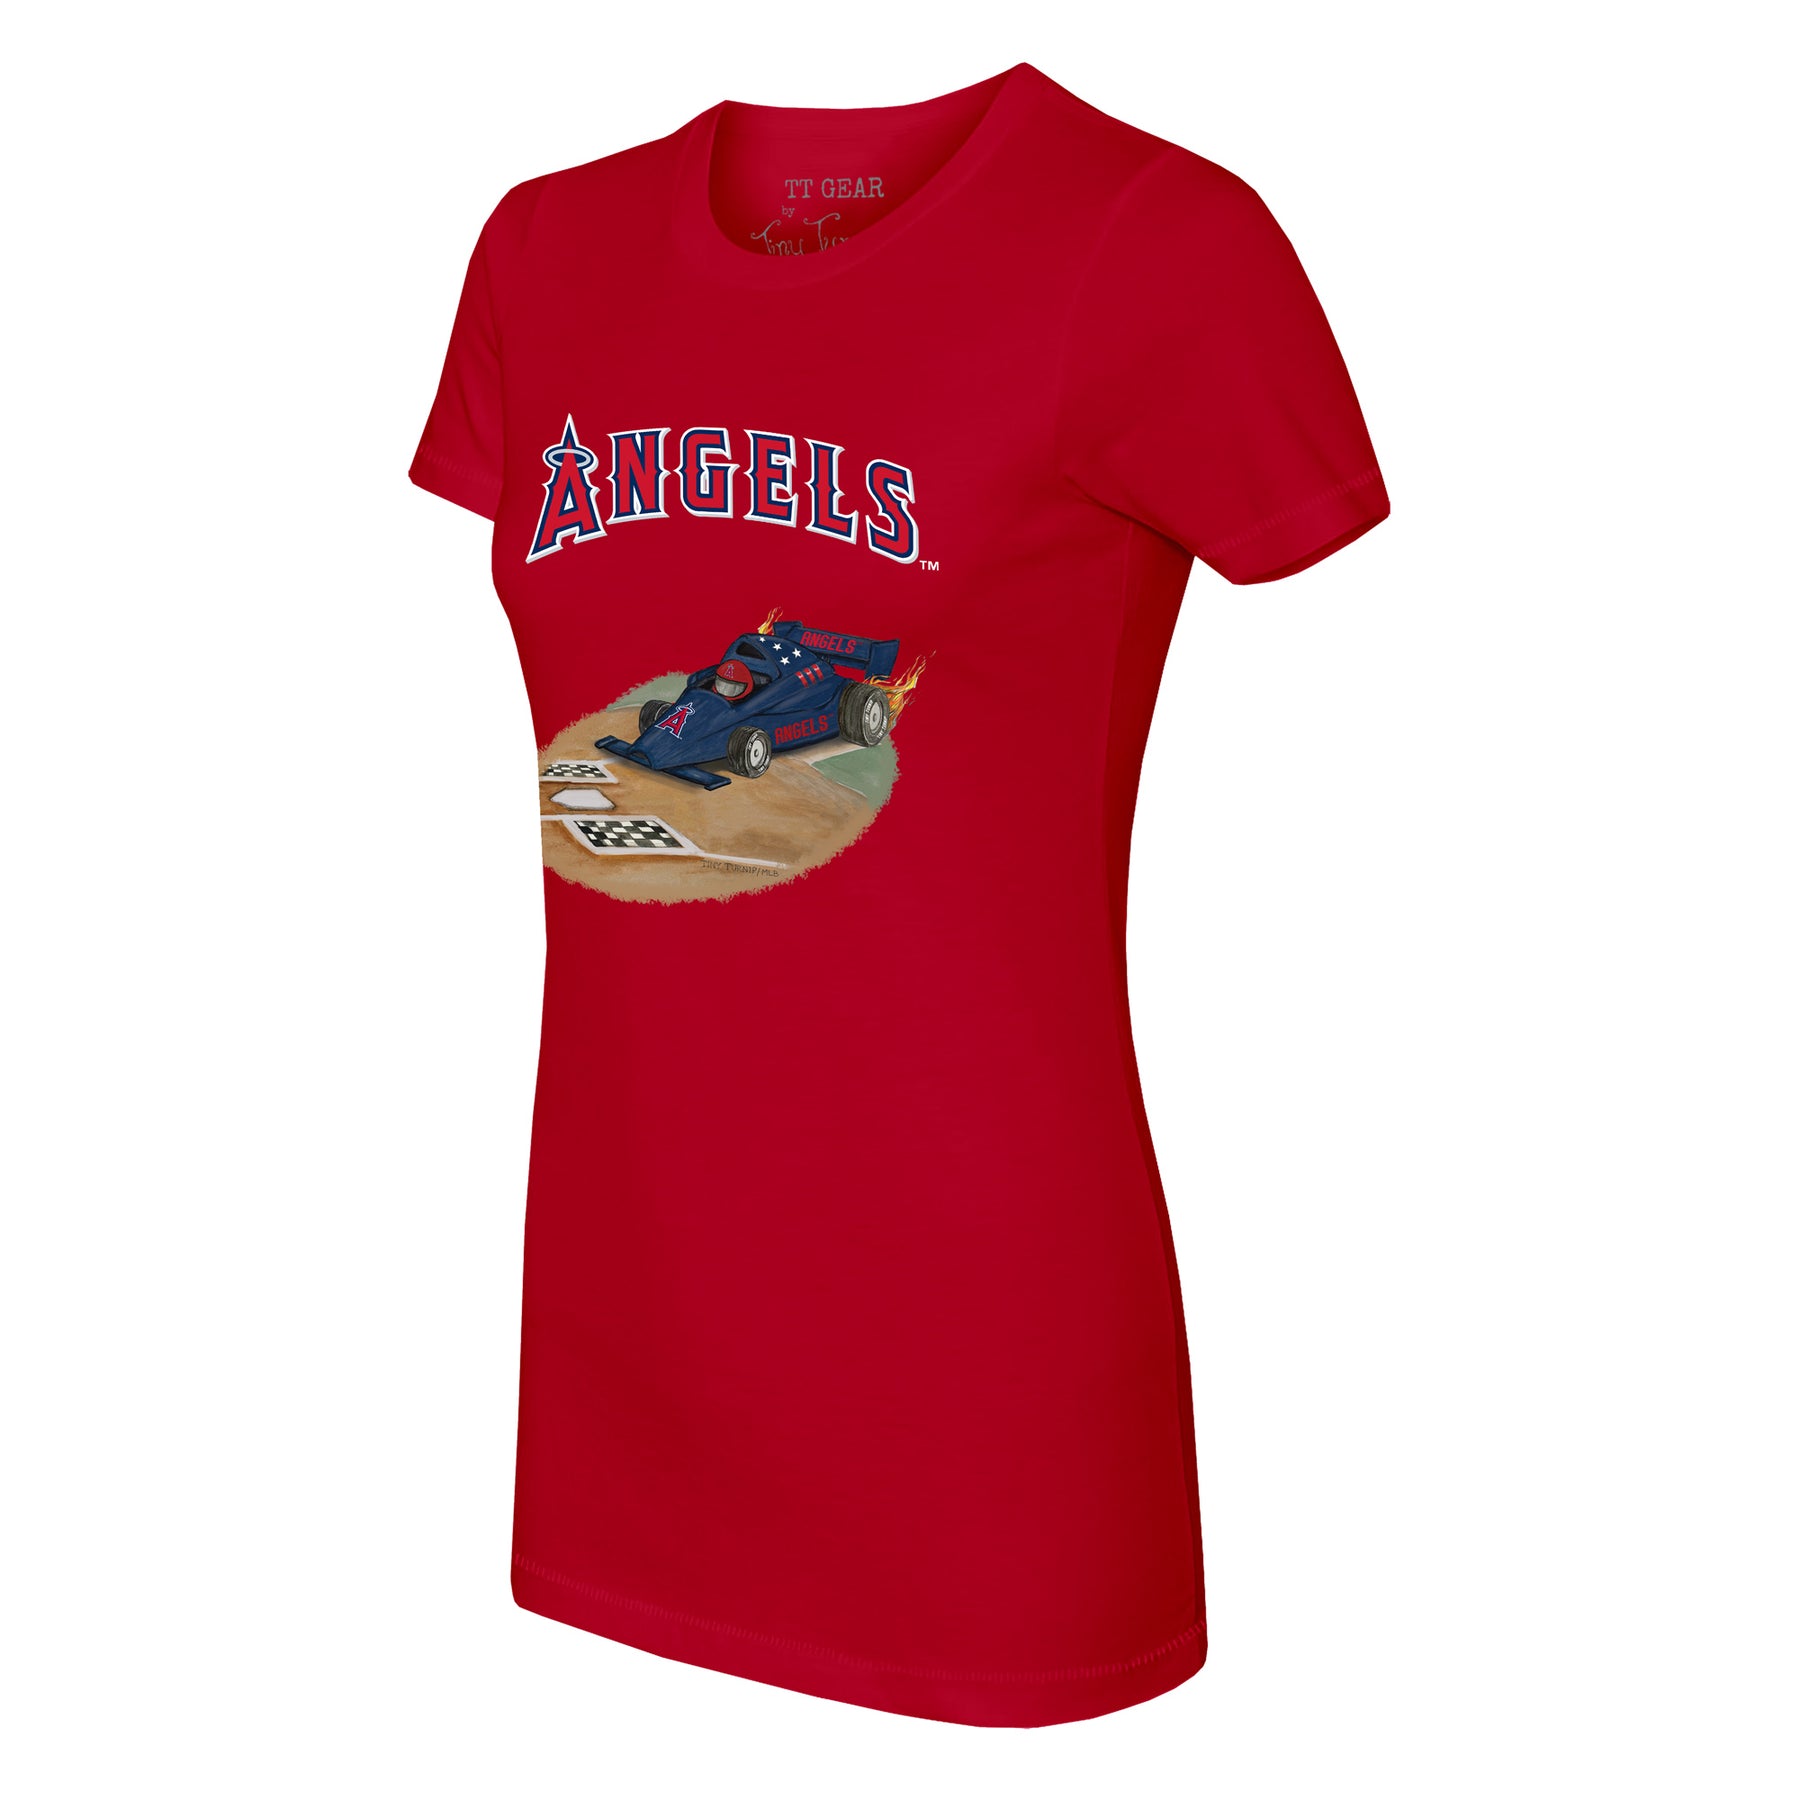 Los Angeles Angels Race Car Tee Shirt